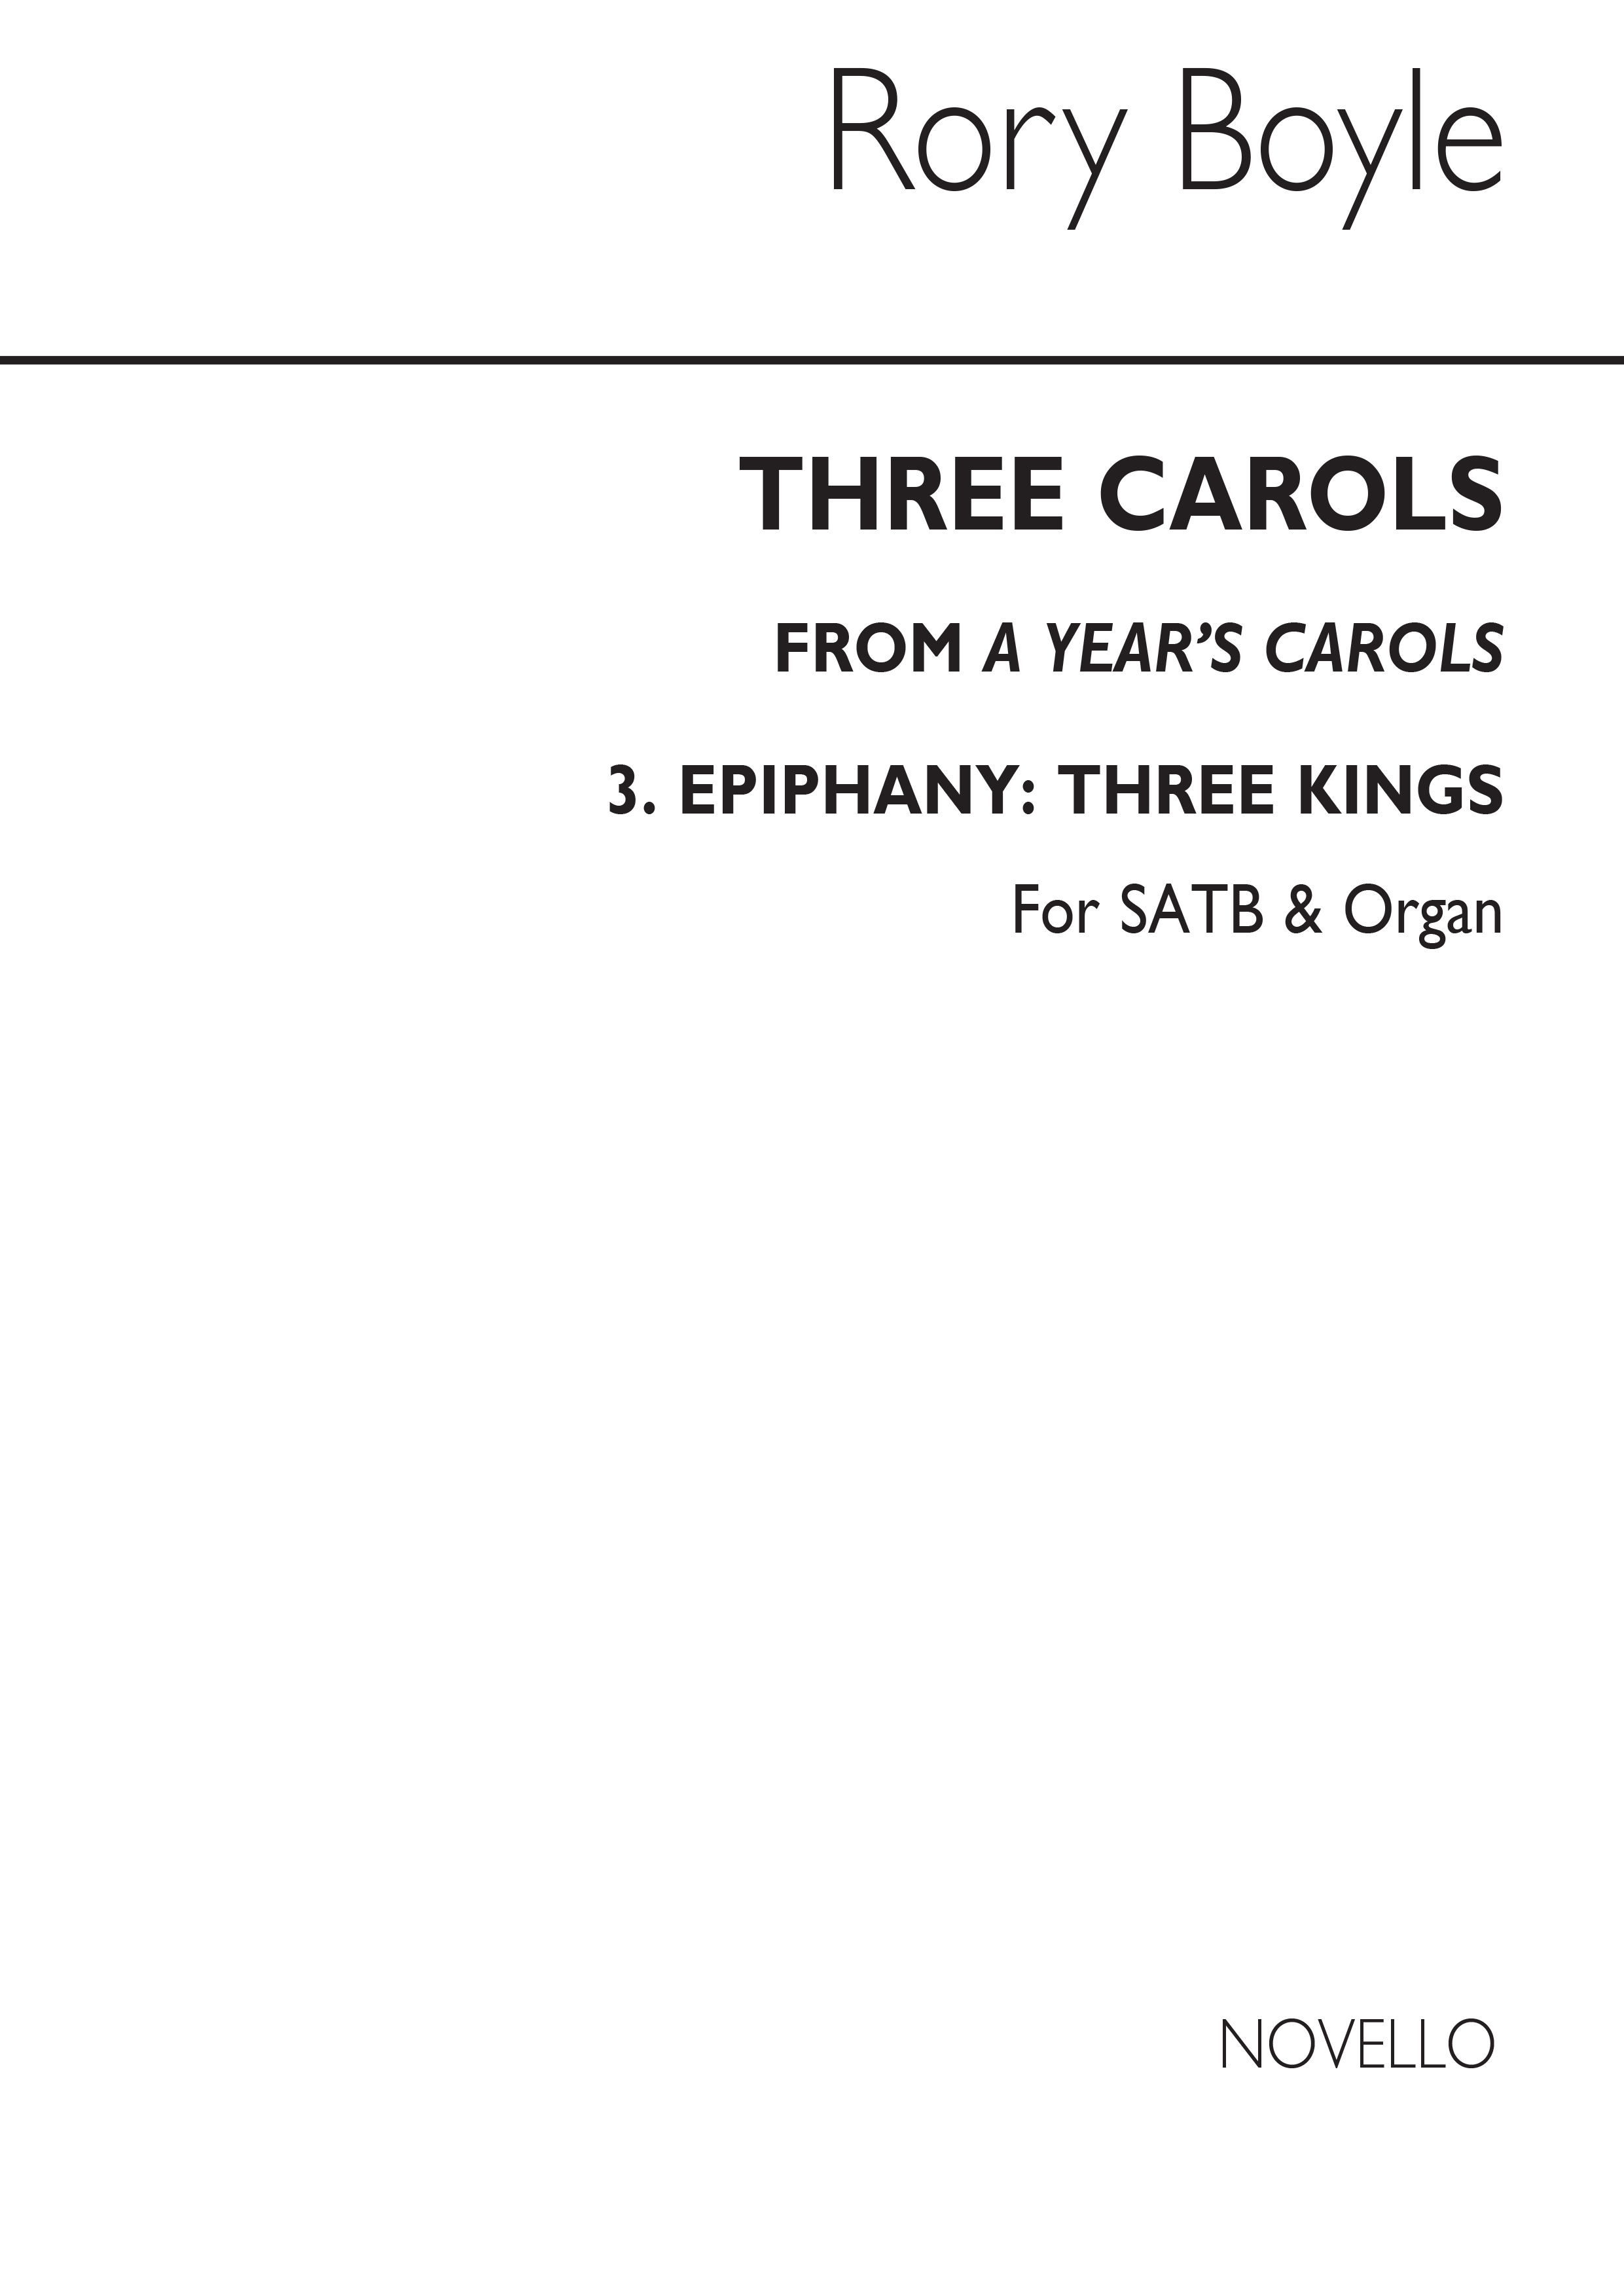 Rory Boyle: A Year's Carols No.3 - Three Kings (Epiphany): SATB: Vocal Score